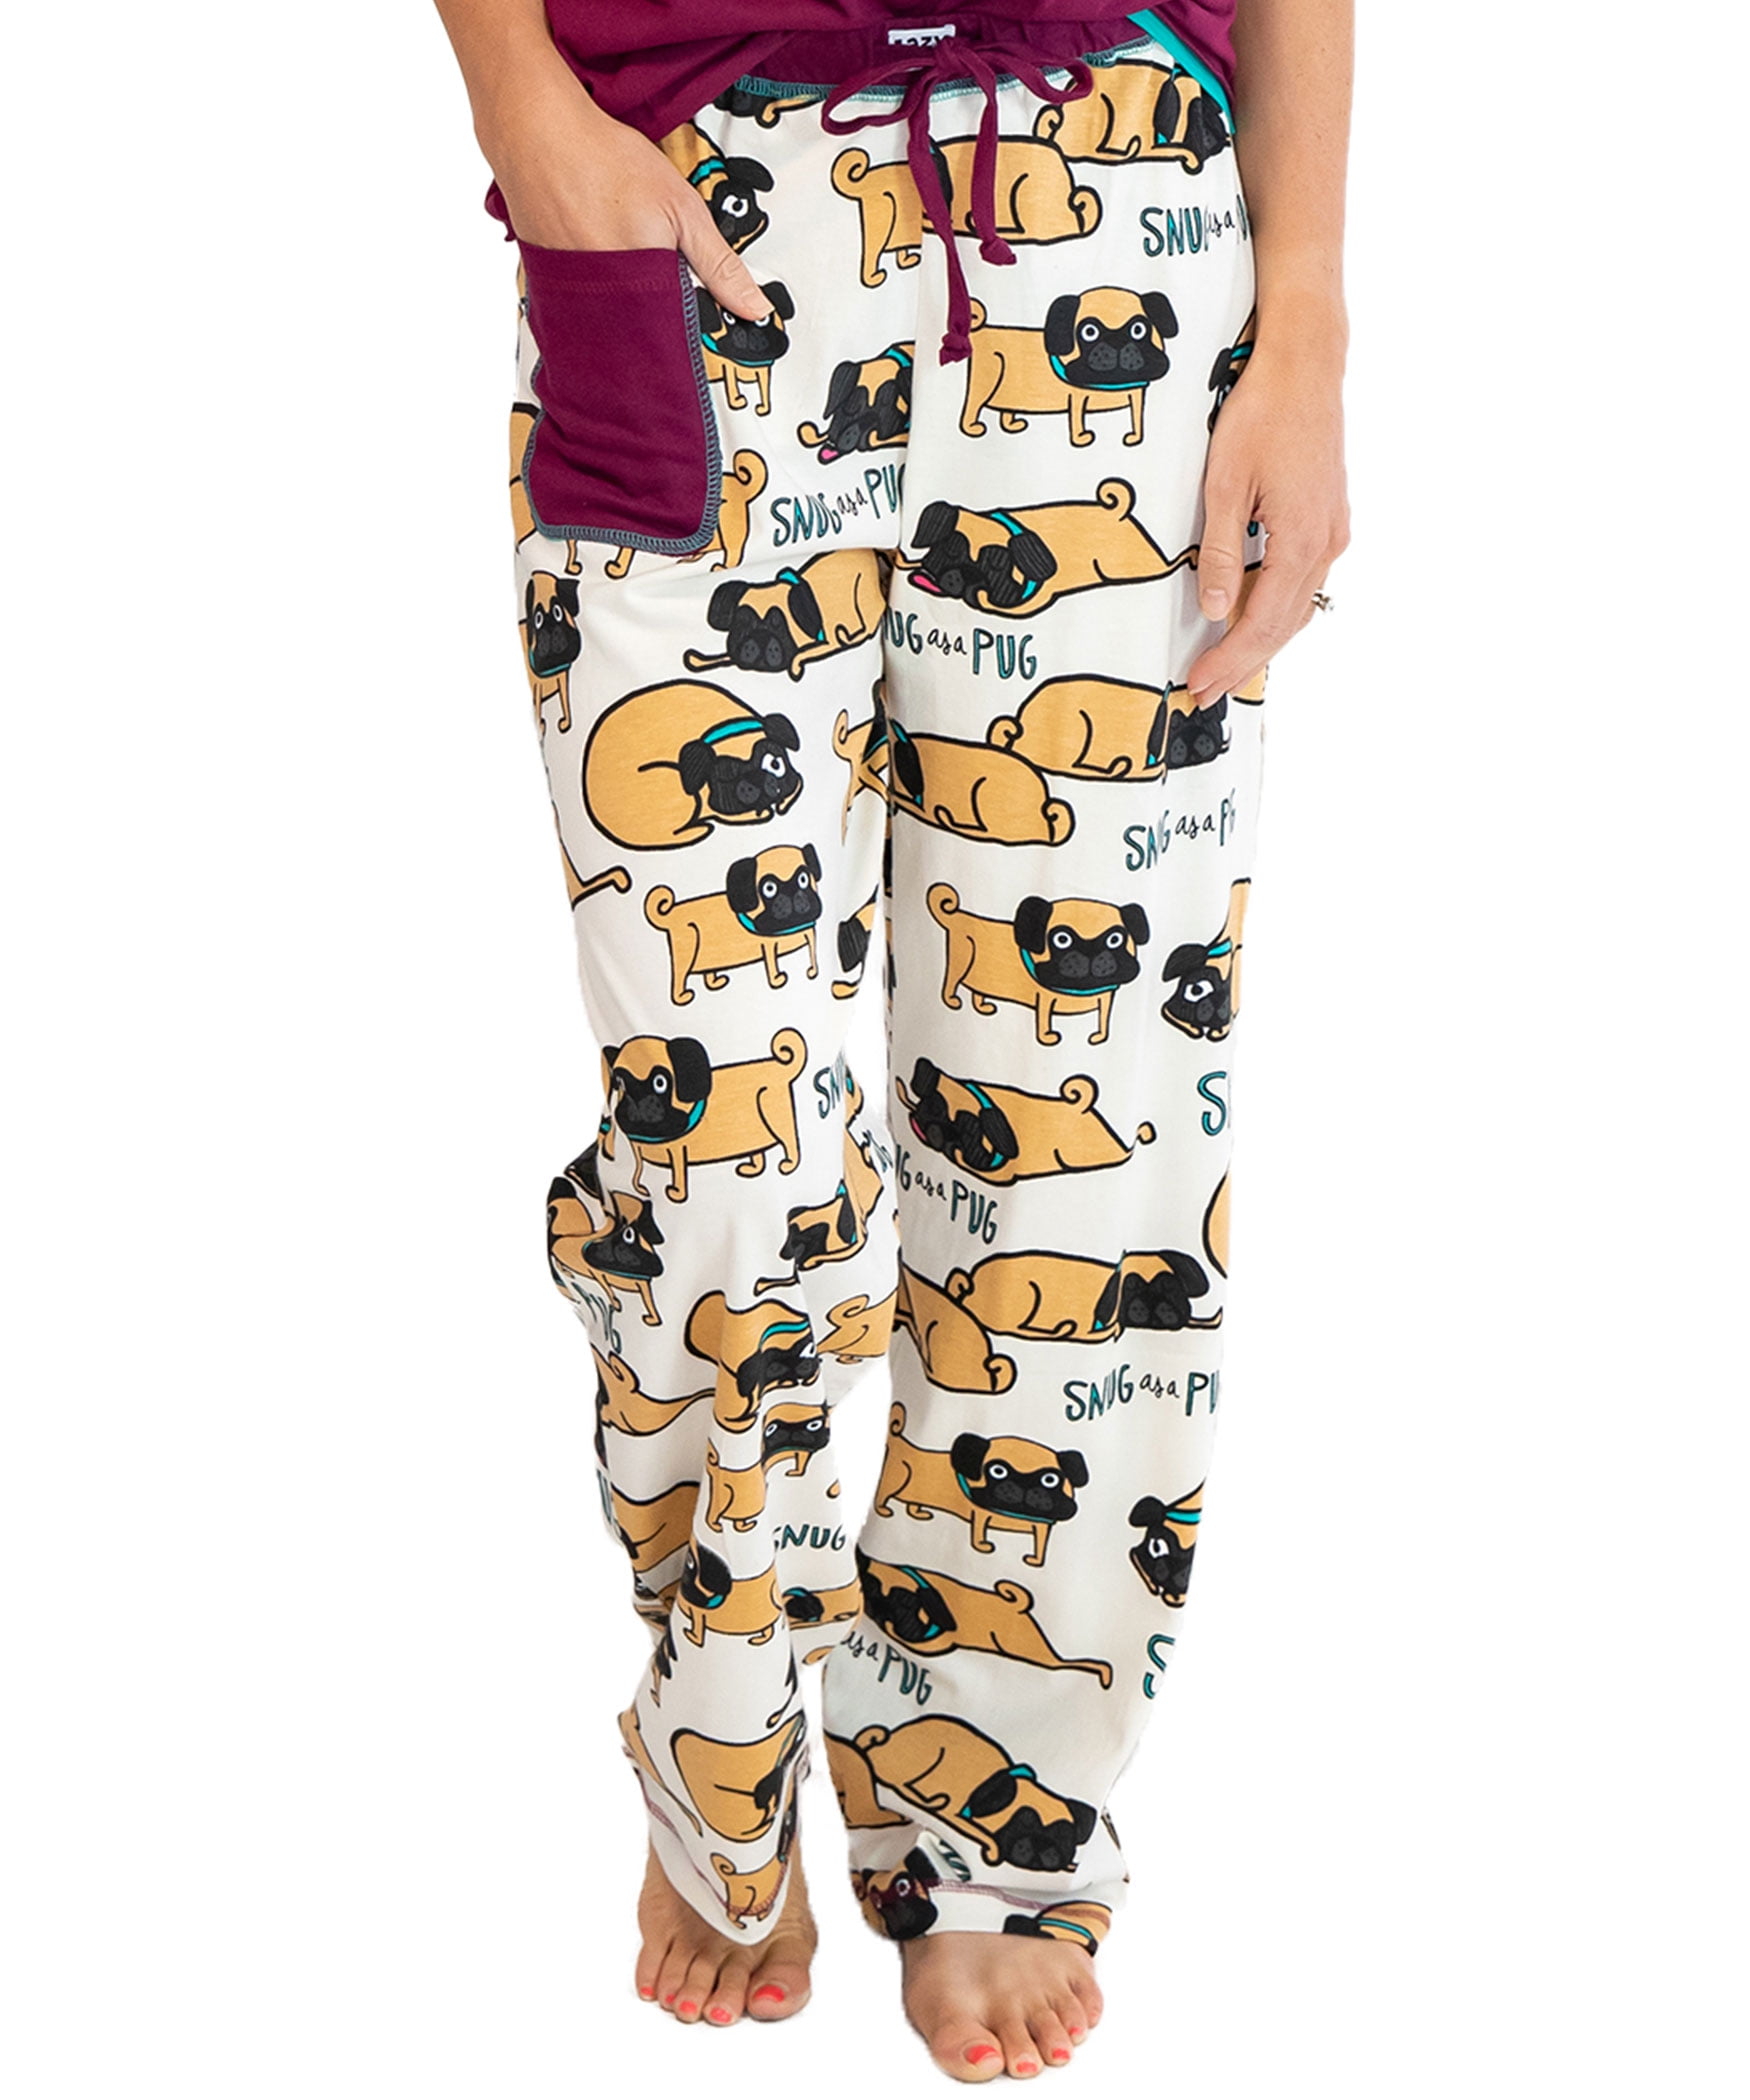 LazyOne Pajamas for Women, Cute Pajama Pants and Top Separates, Snug Pug,  Medium